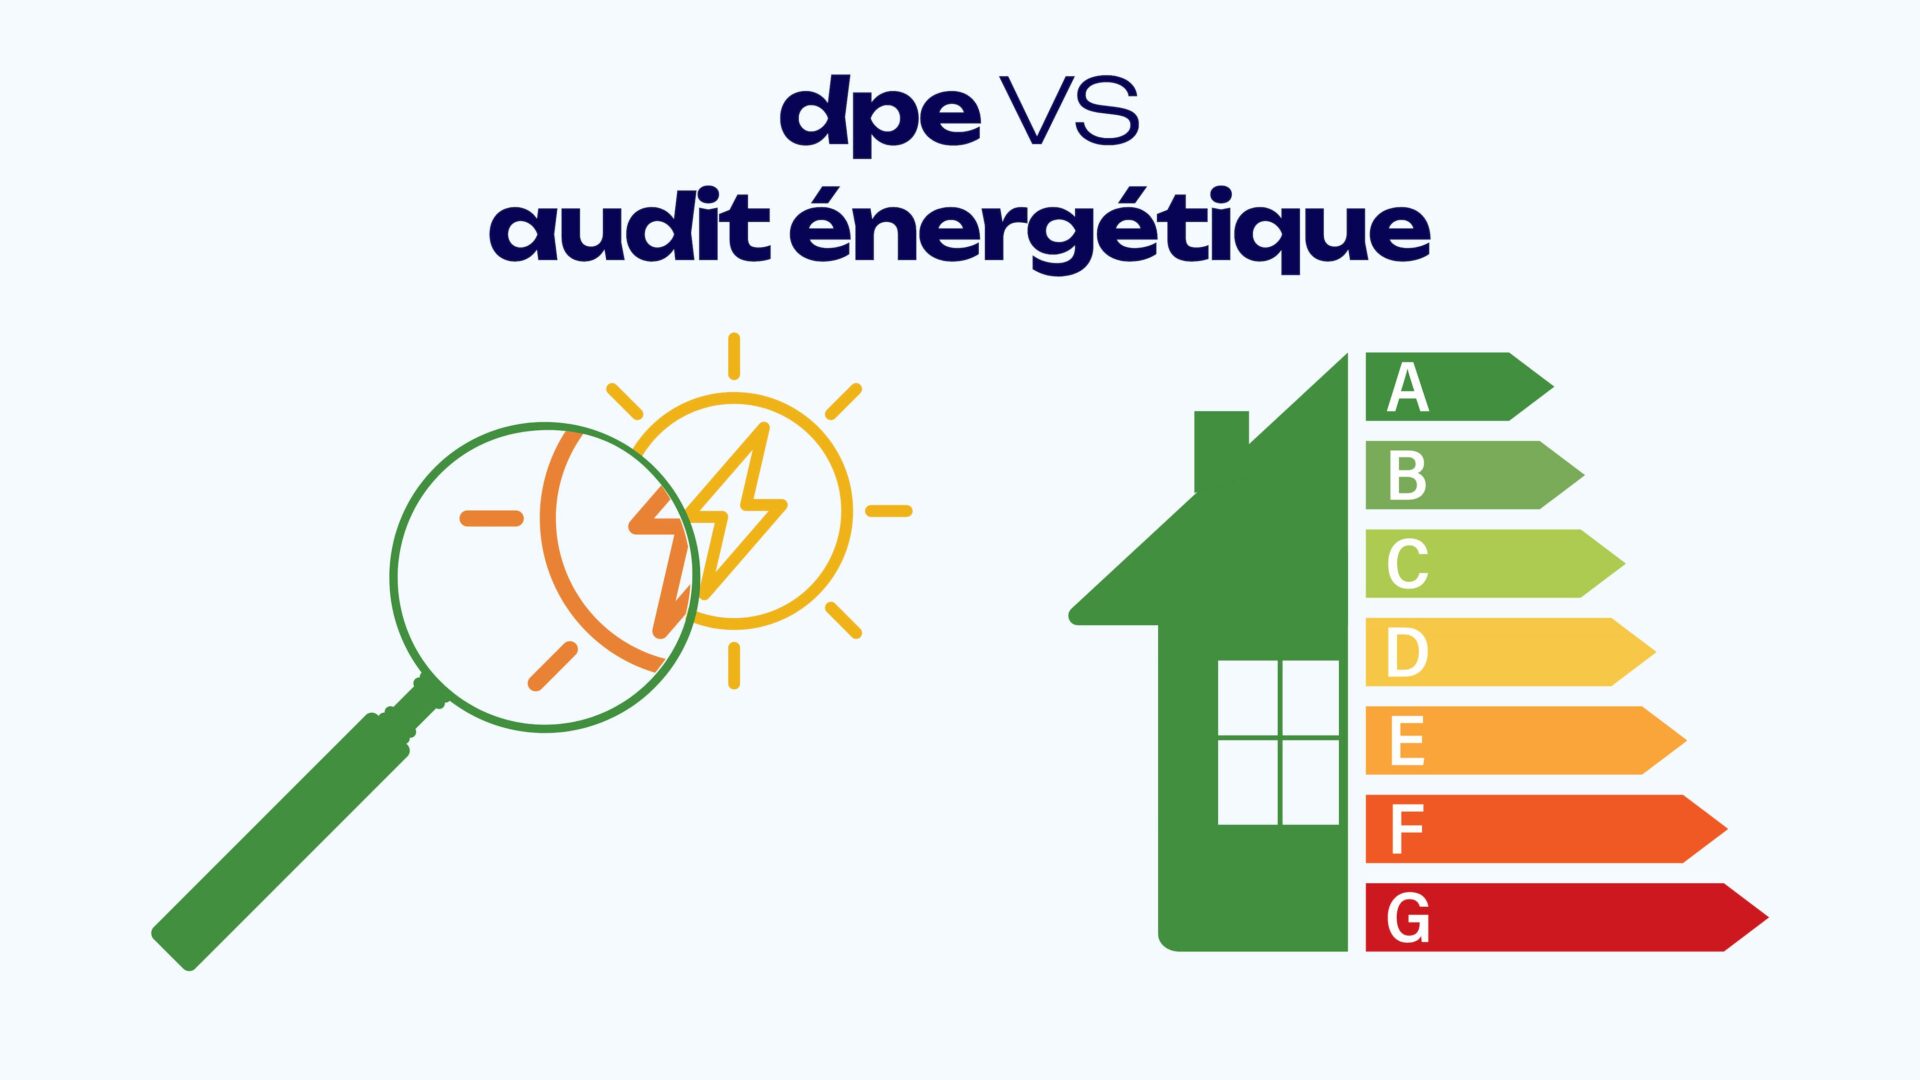 dpe vs audit energetique scaled